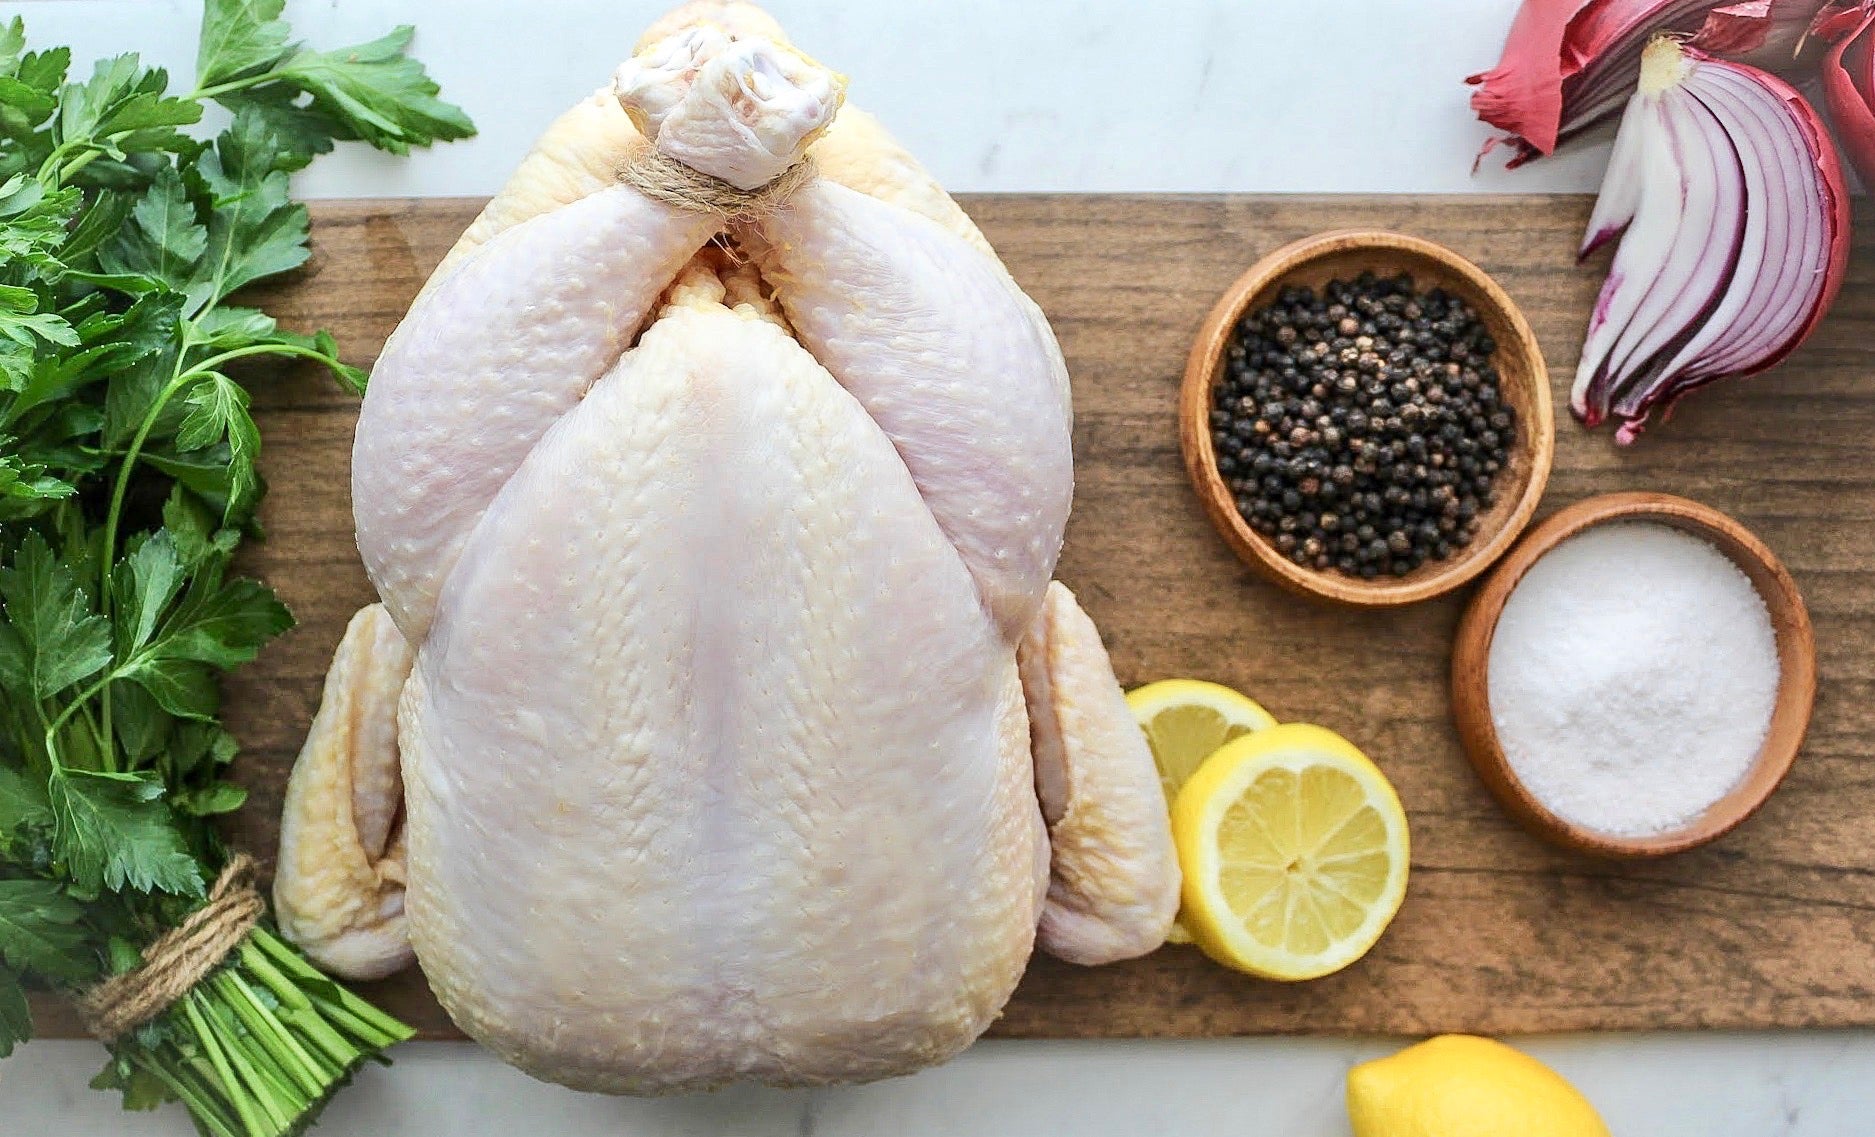 Alabama Organic Whole Pastured Chicken. NON-GMO, NO Antibiotic, Soy Free Chicken